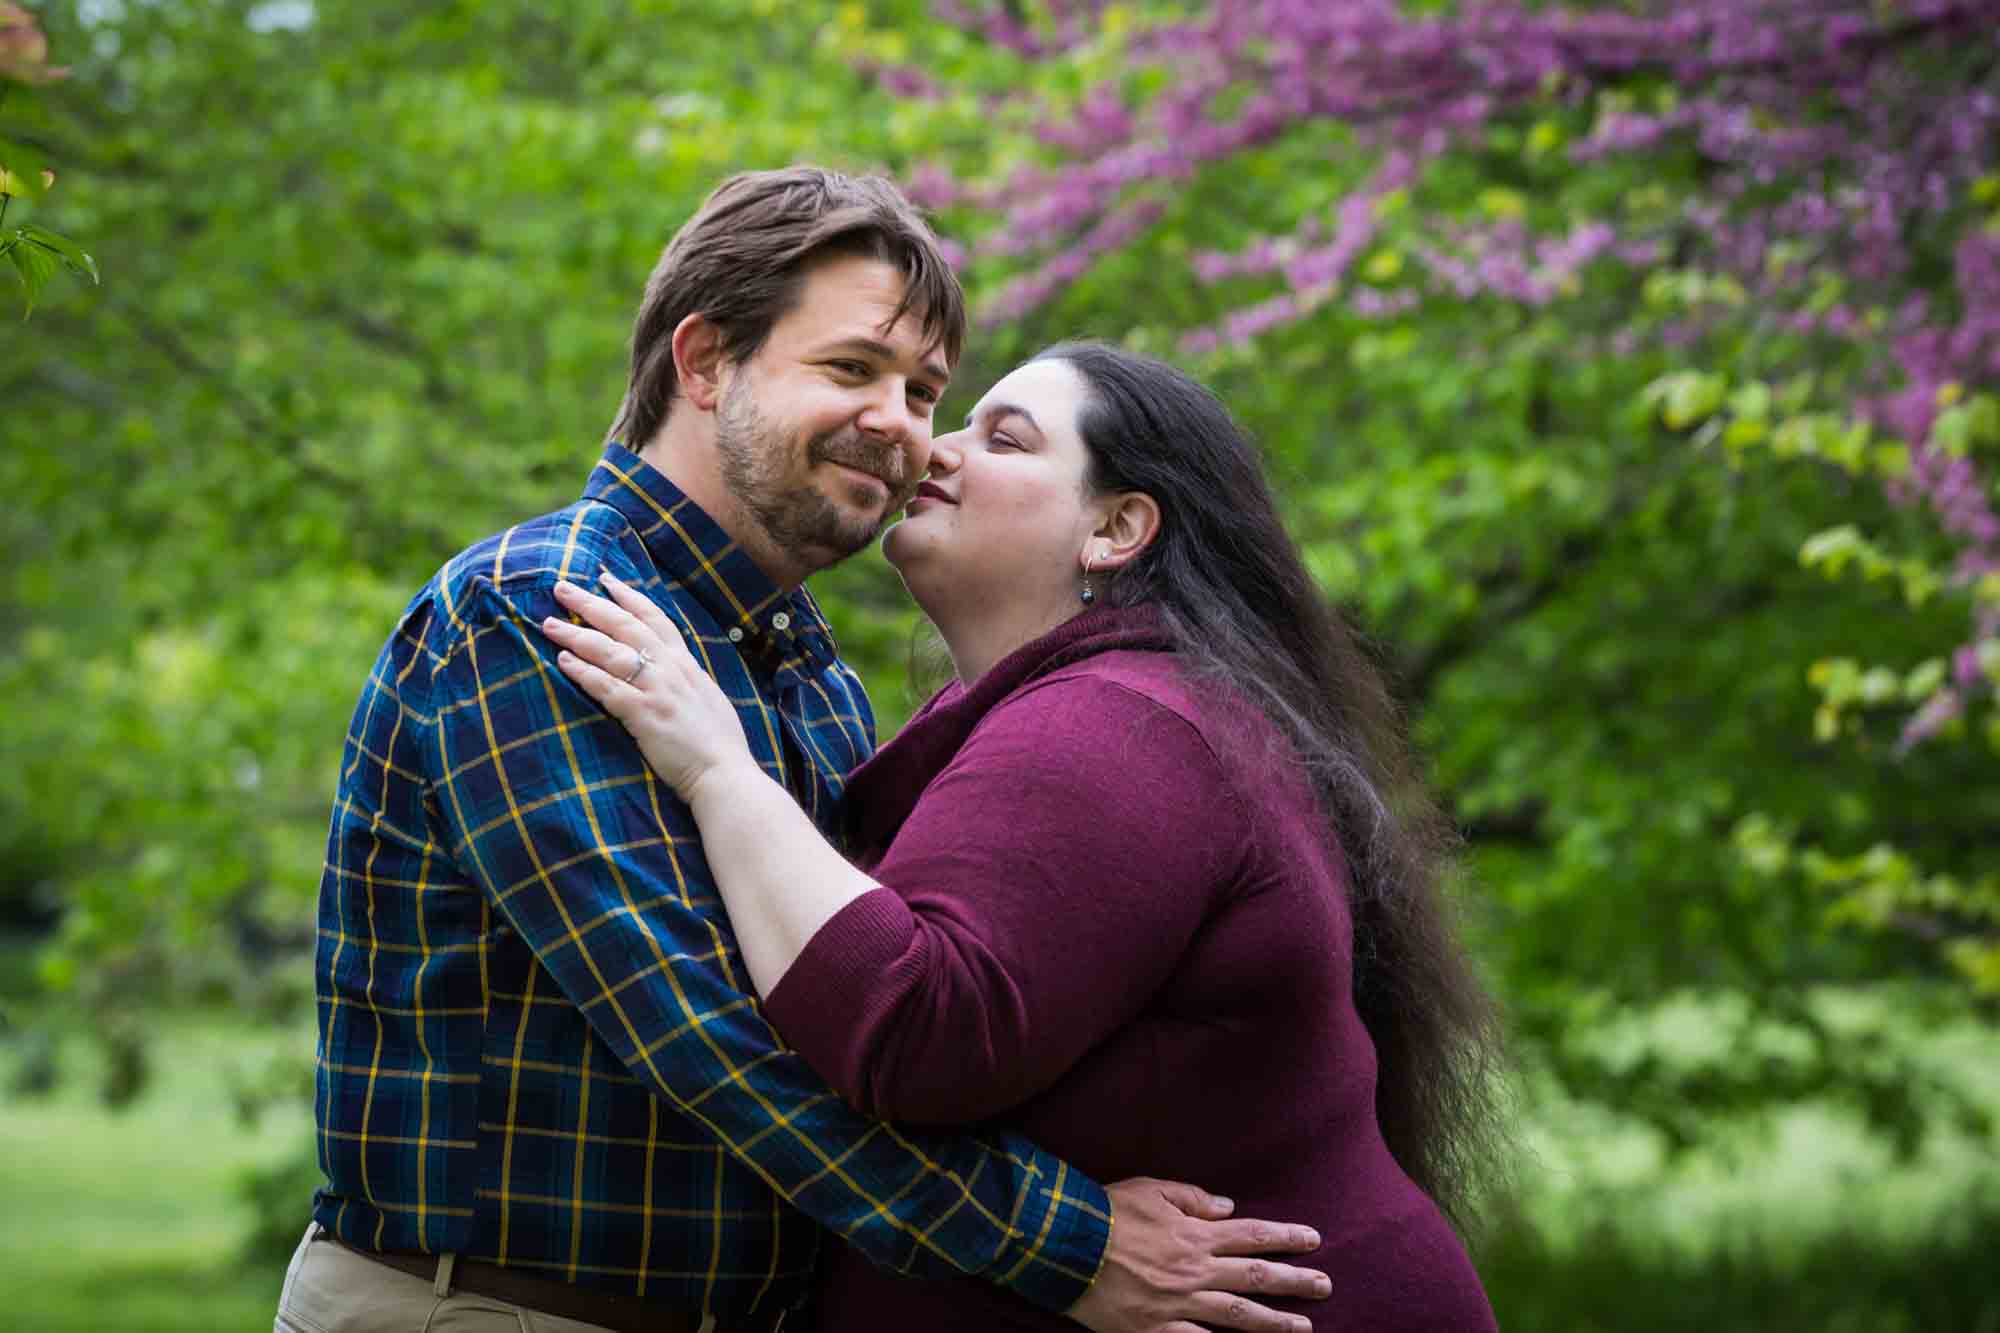 Snug Harbor engagement photos of woman kissing man's cheek in garden